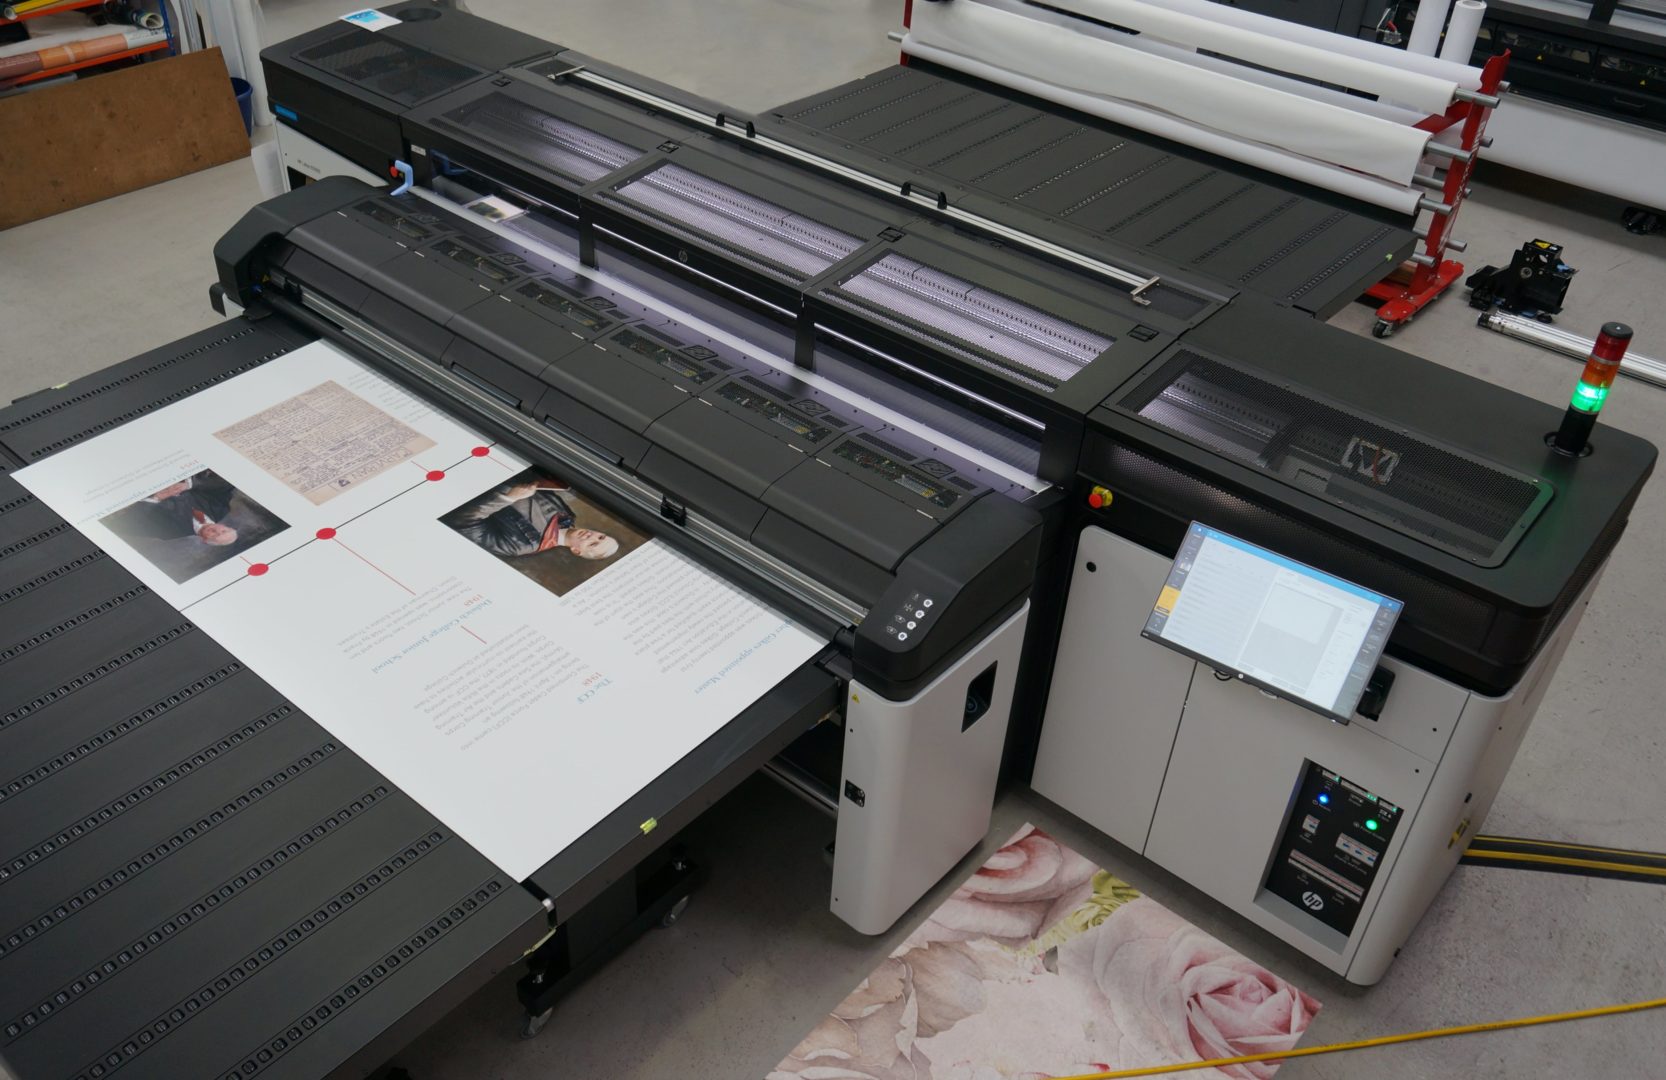 New printing technology